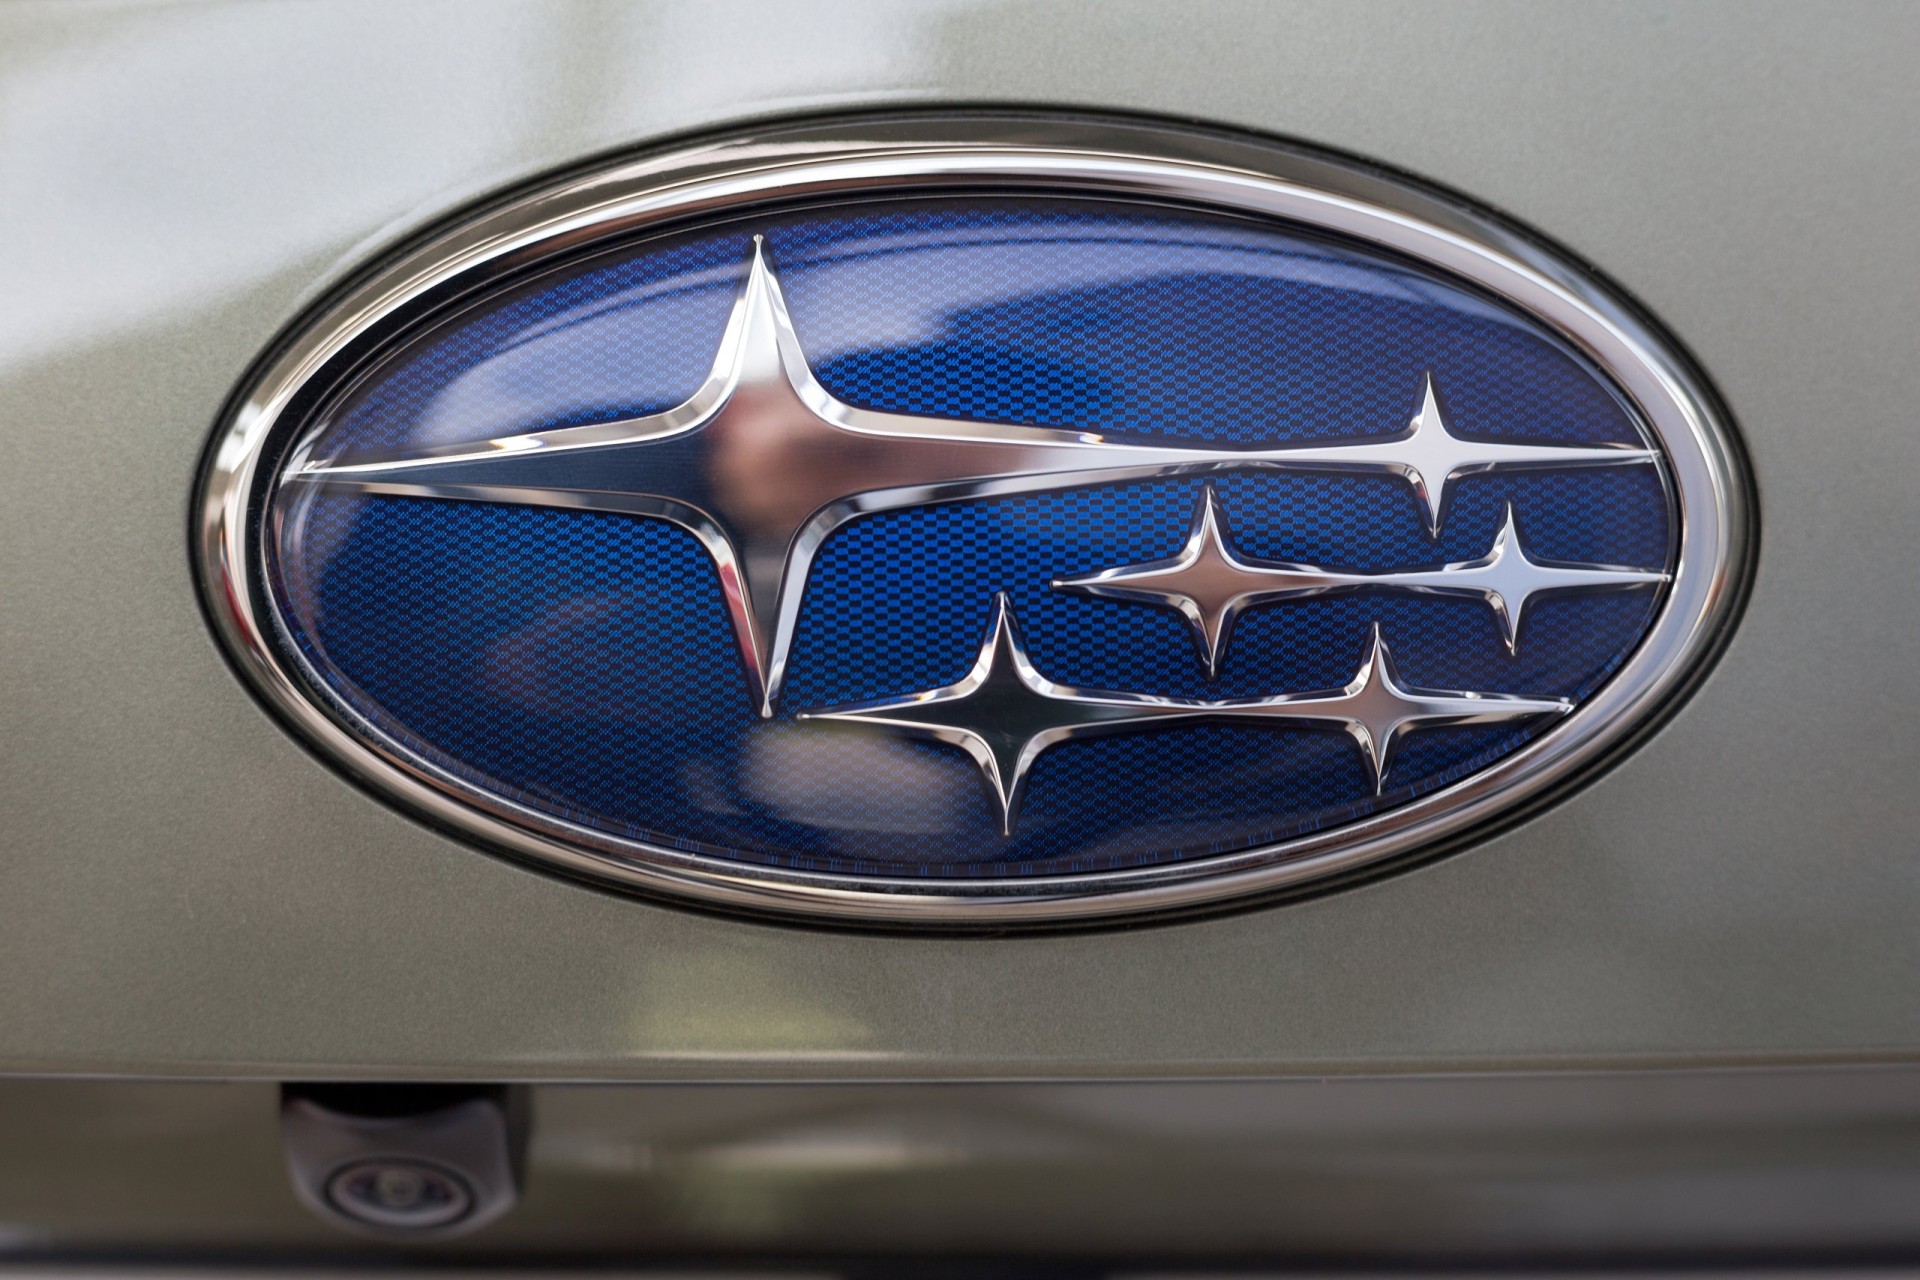  Logo of Subaru car on display in the dealer showroom.